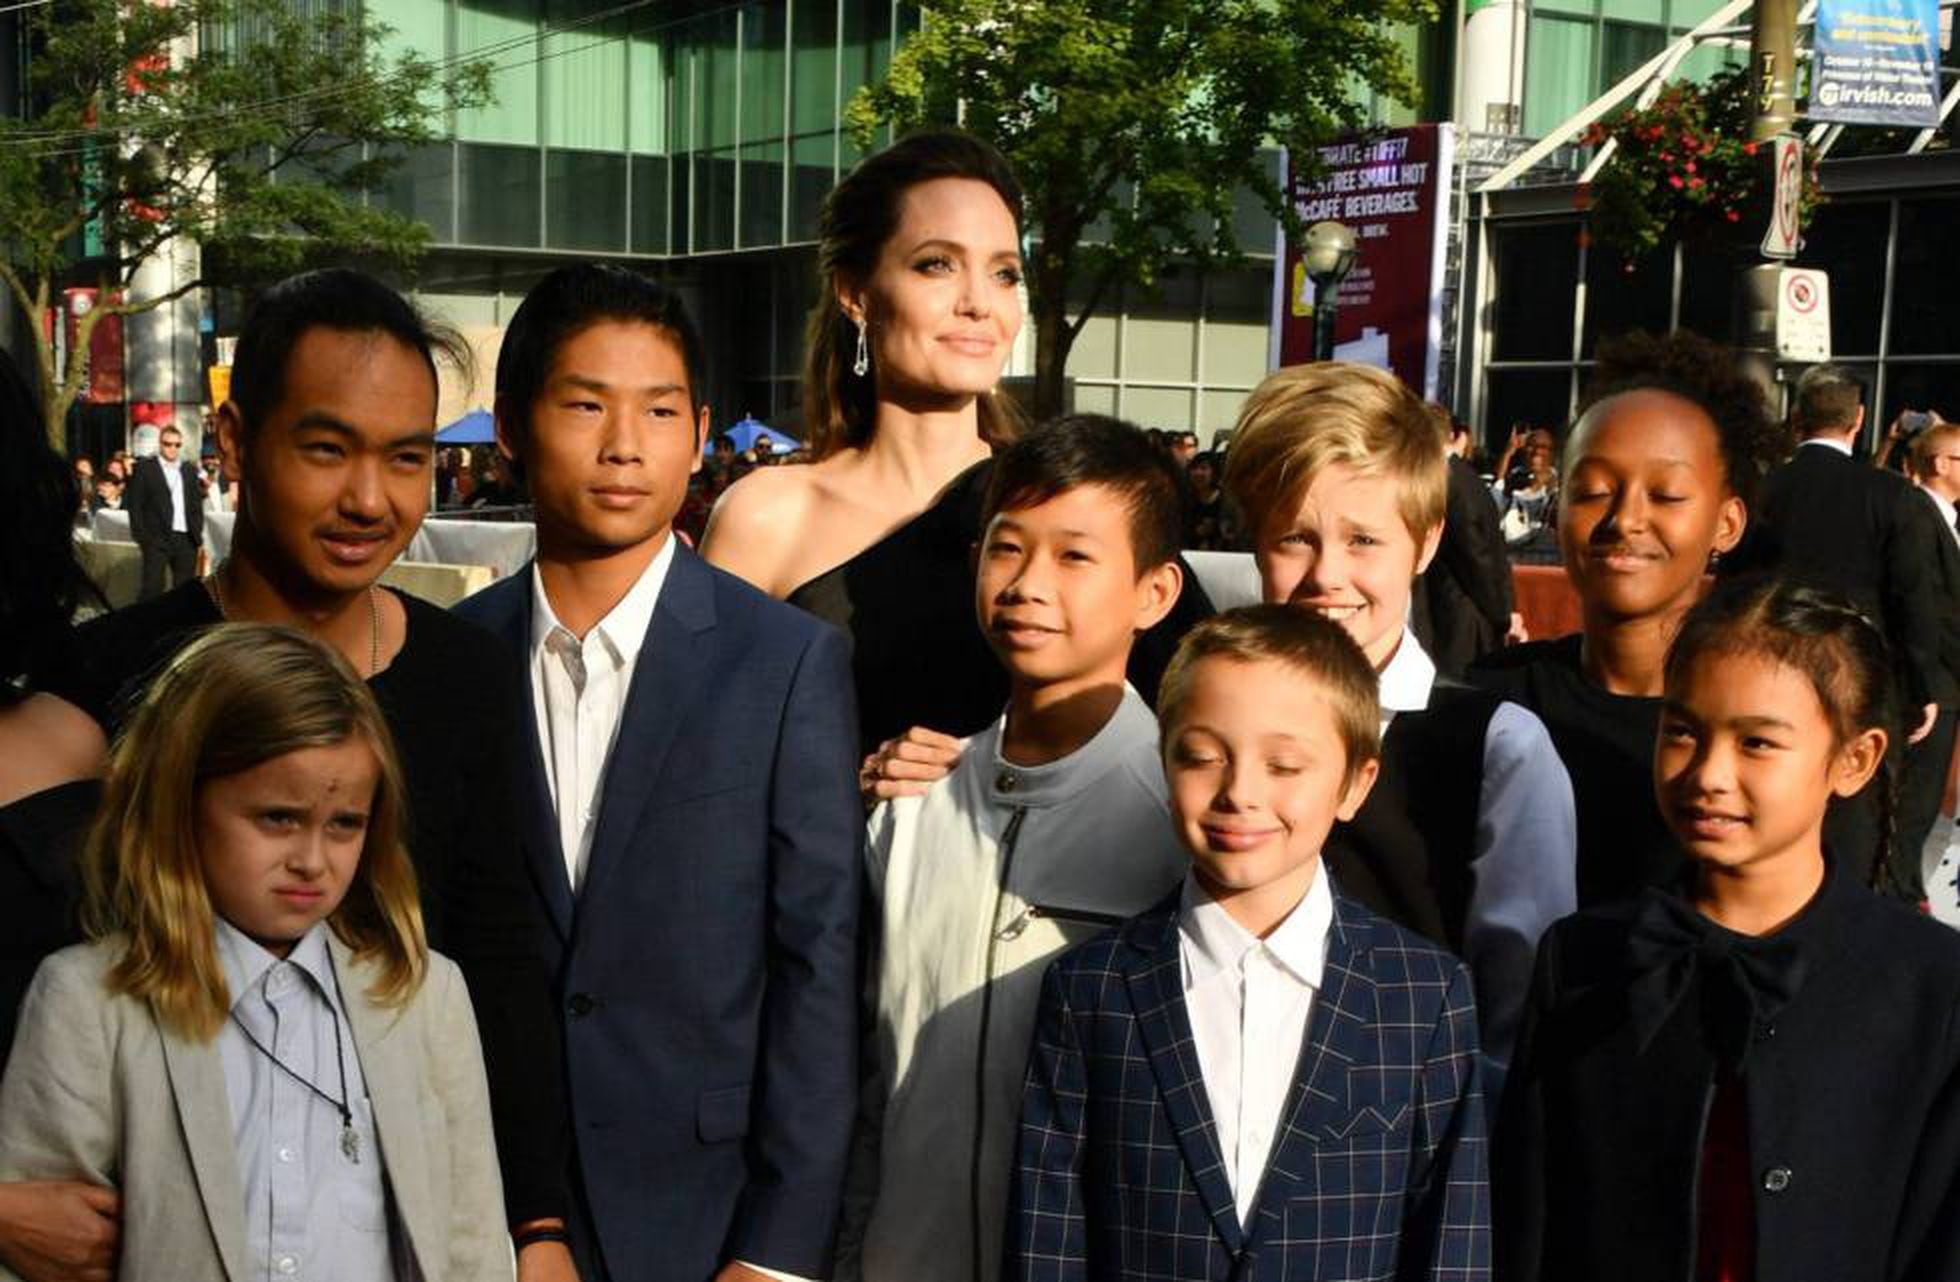 Maddox Jolie-Pitt: “Minha mãe é maravilhosa”, Estilo